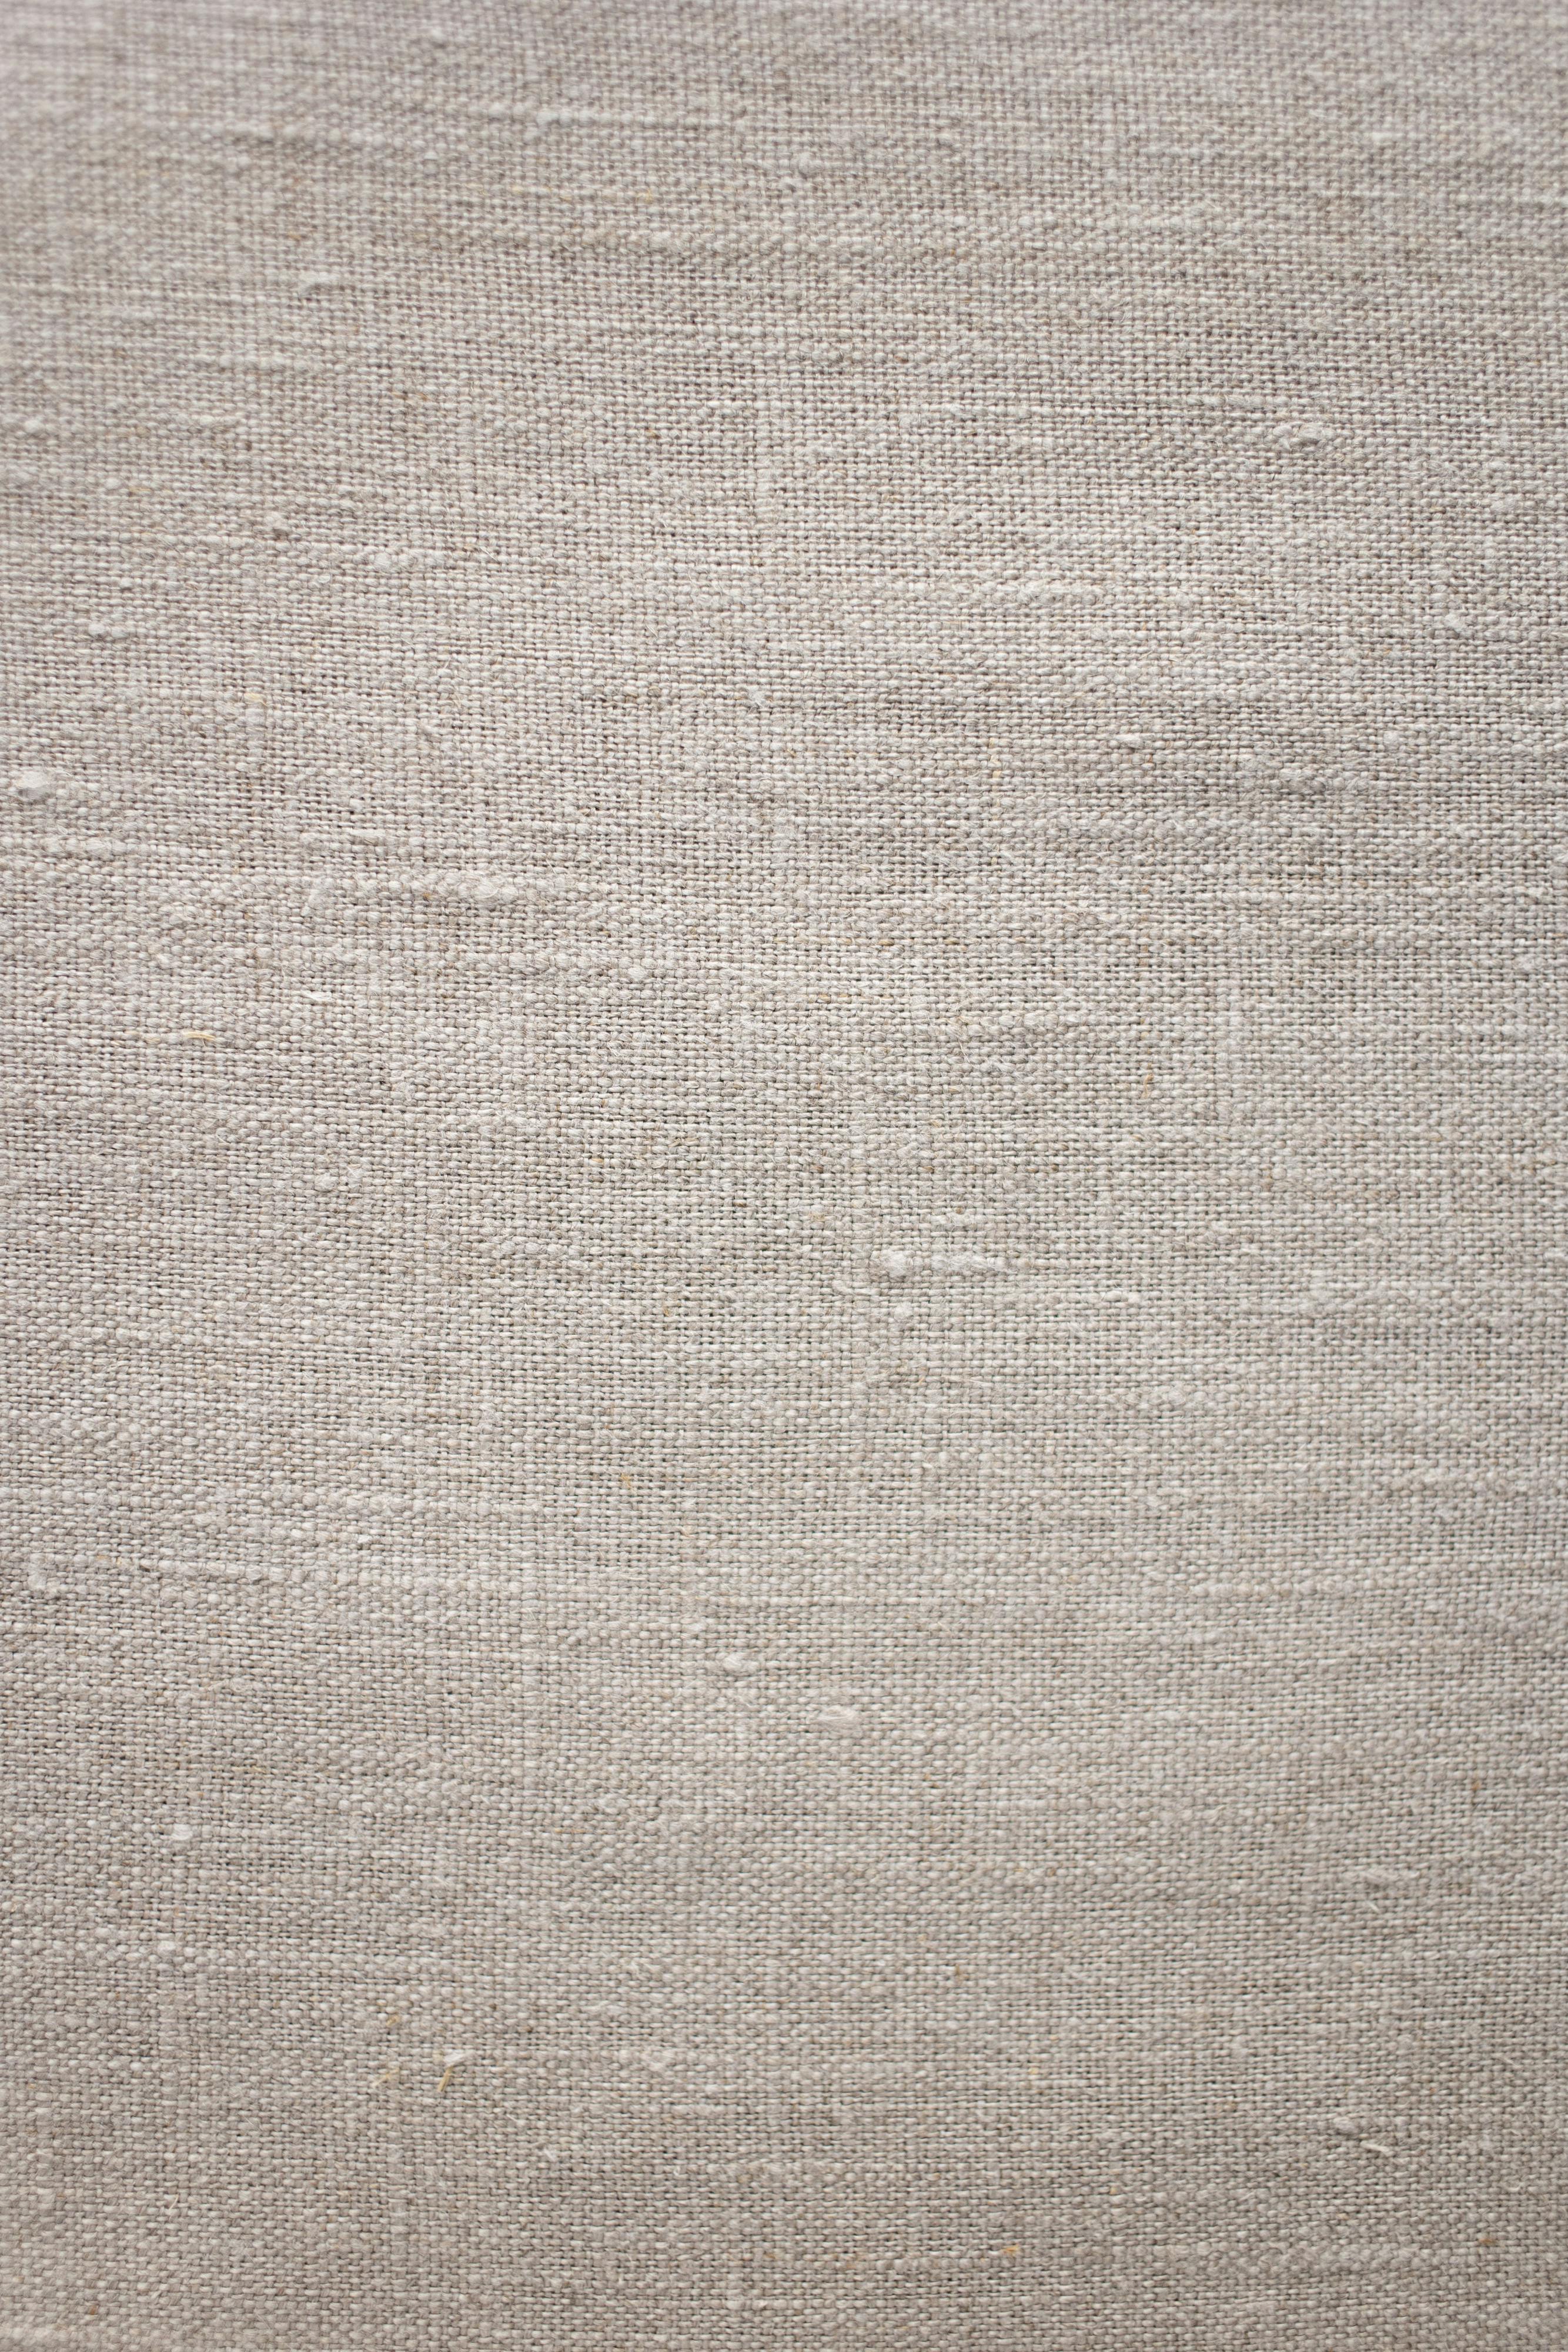 white linen background texture